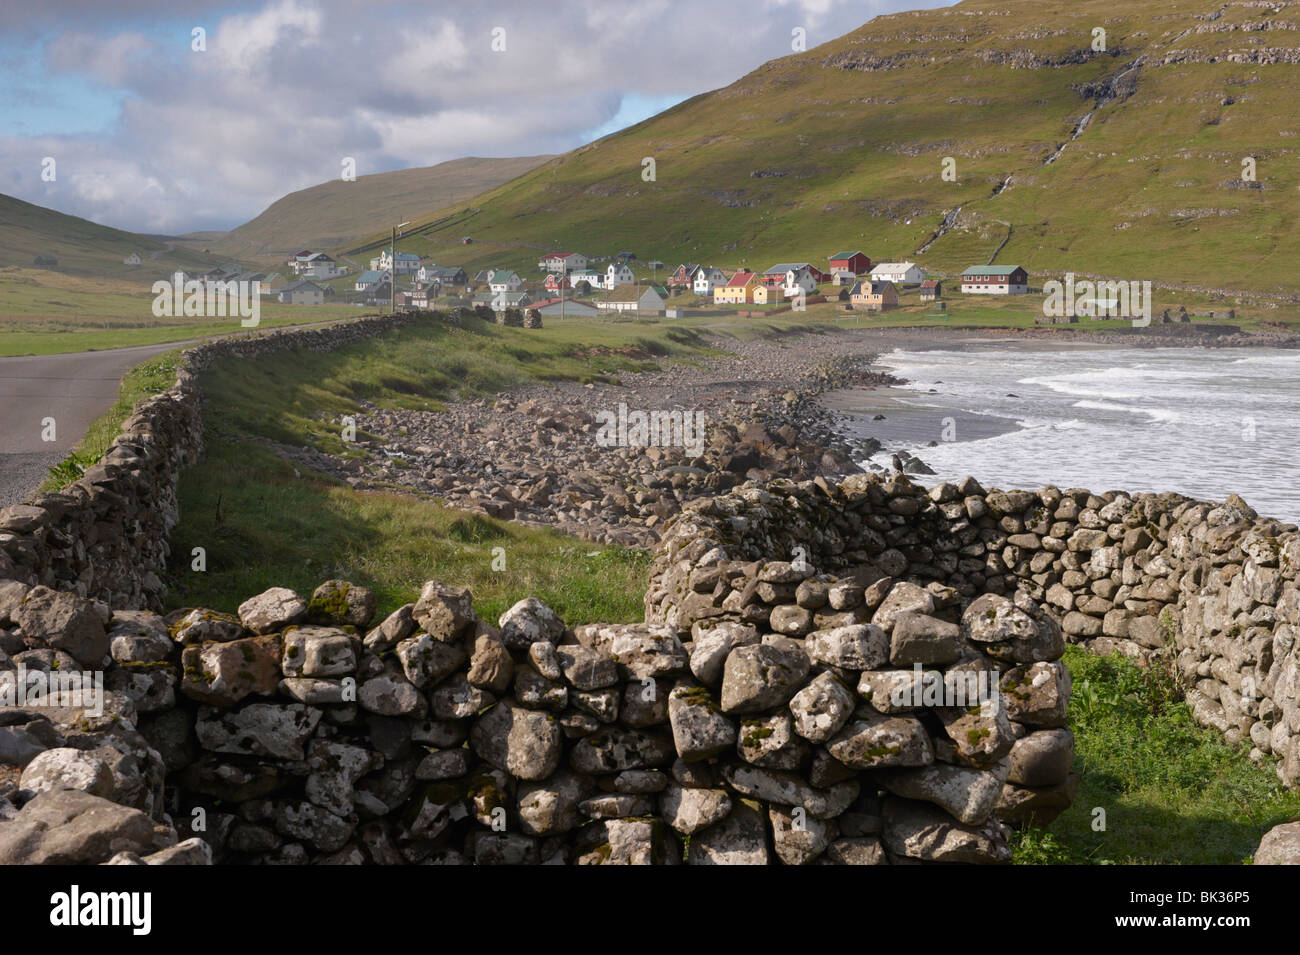 Dry stone walls and village of Husavik, Sandoy, Faroe Islands (Faroes), Denmark, Europe Stock Photo